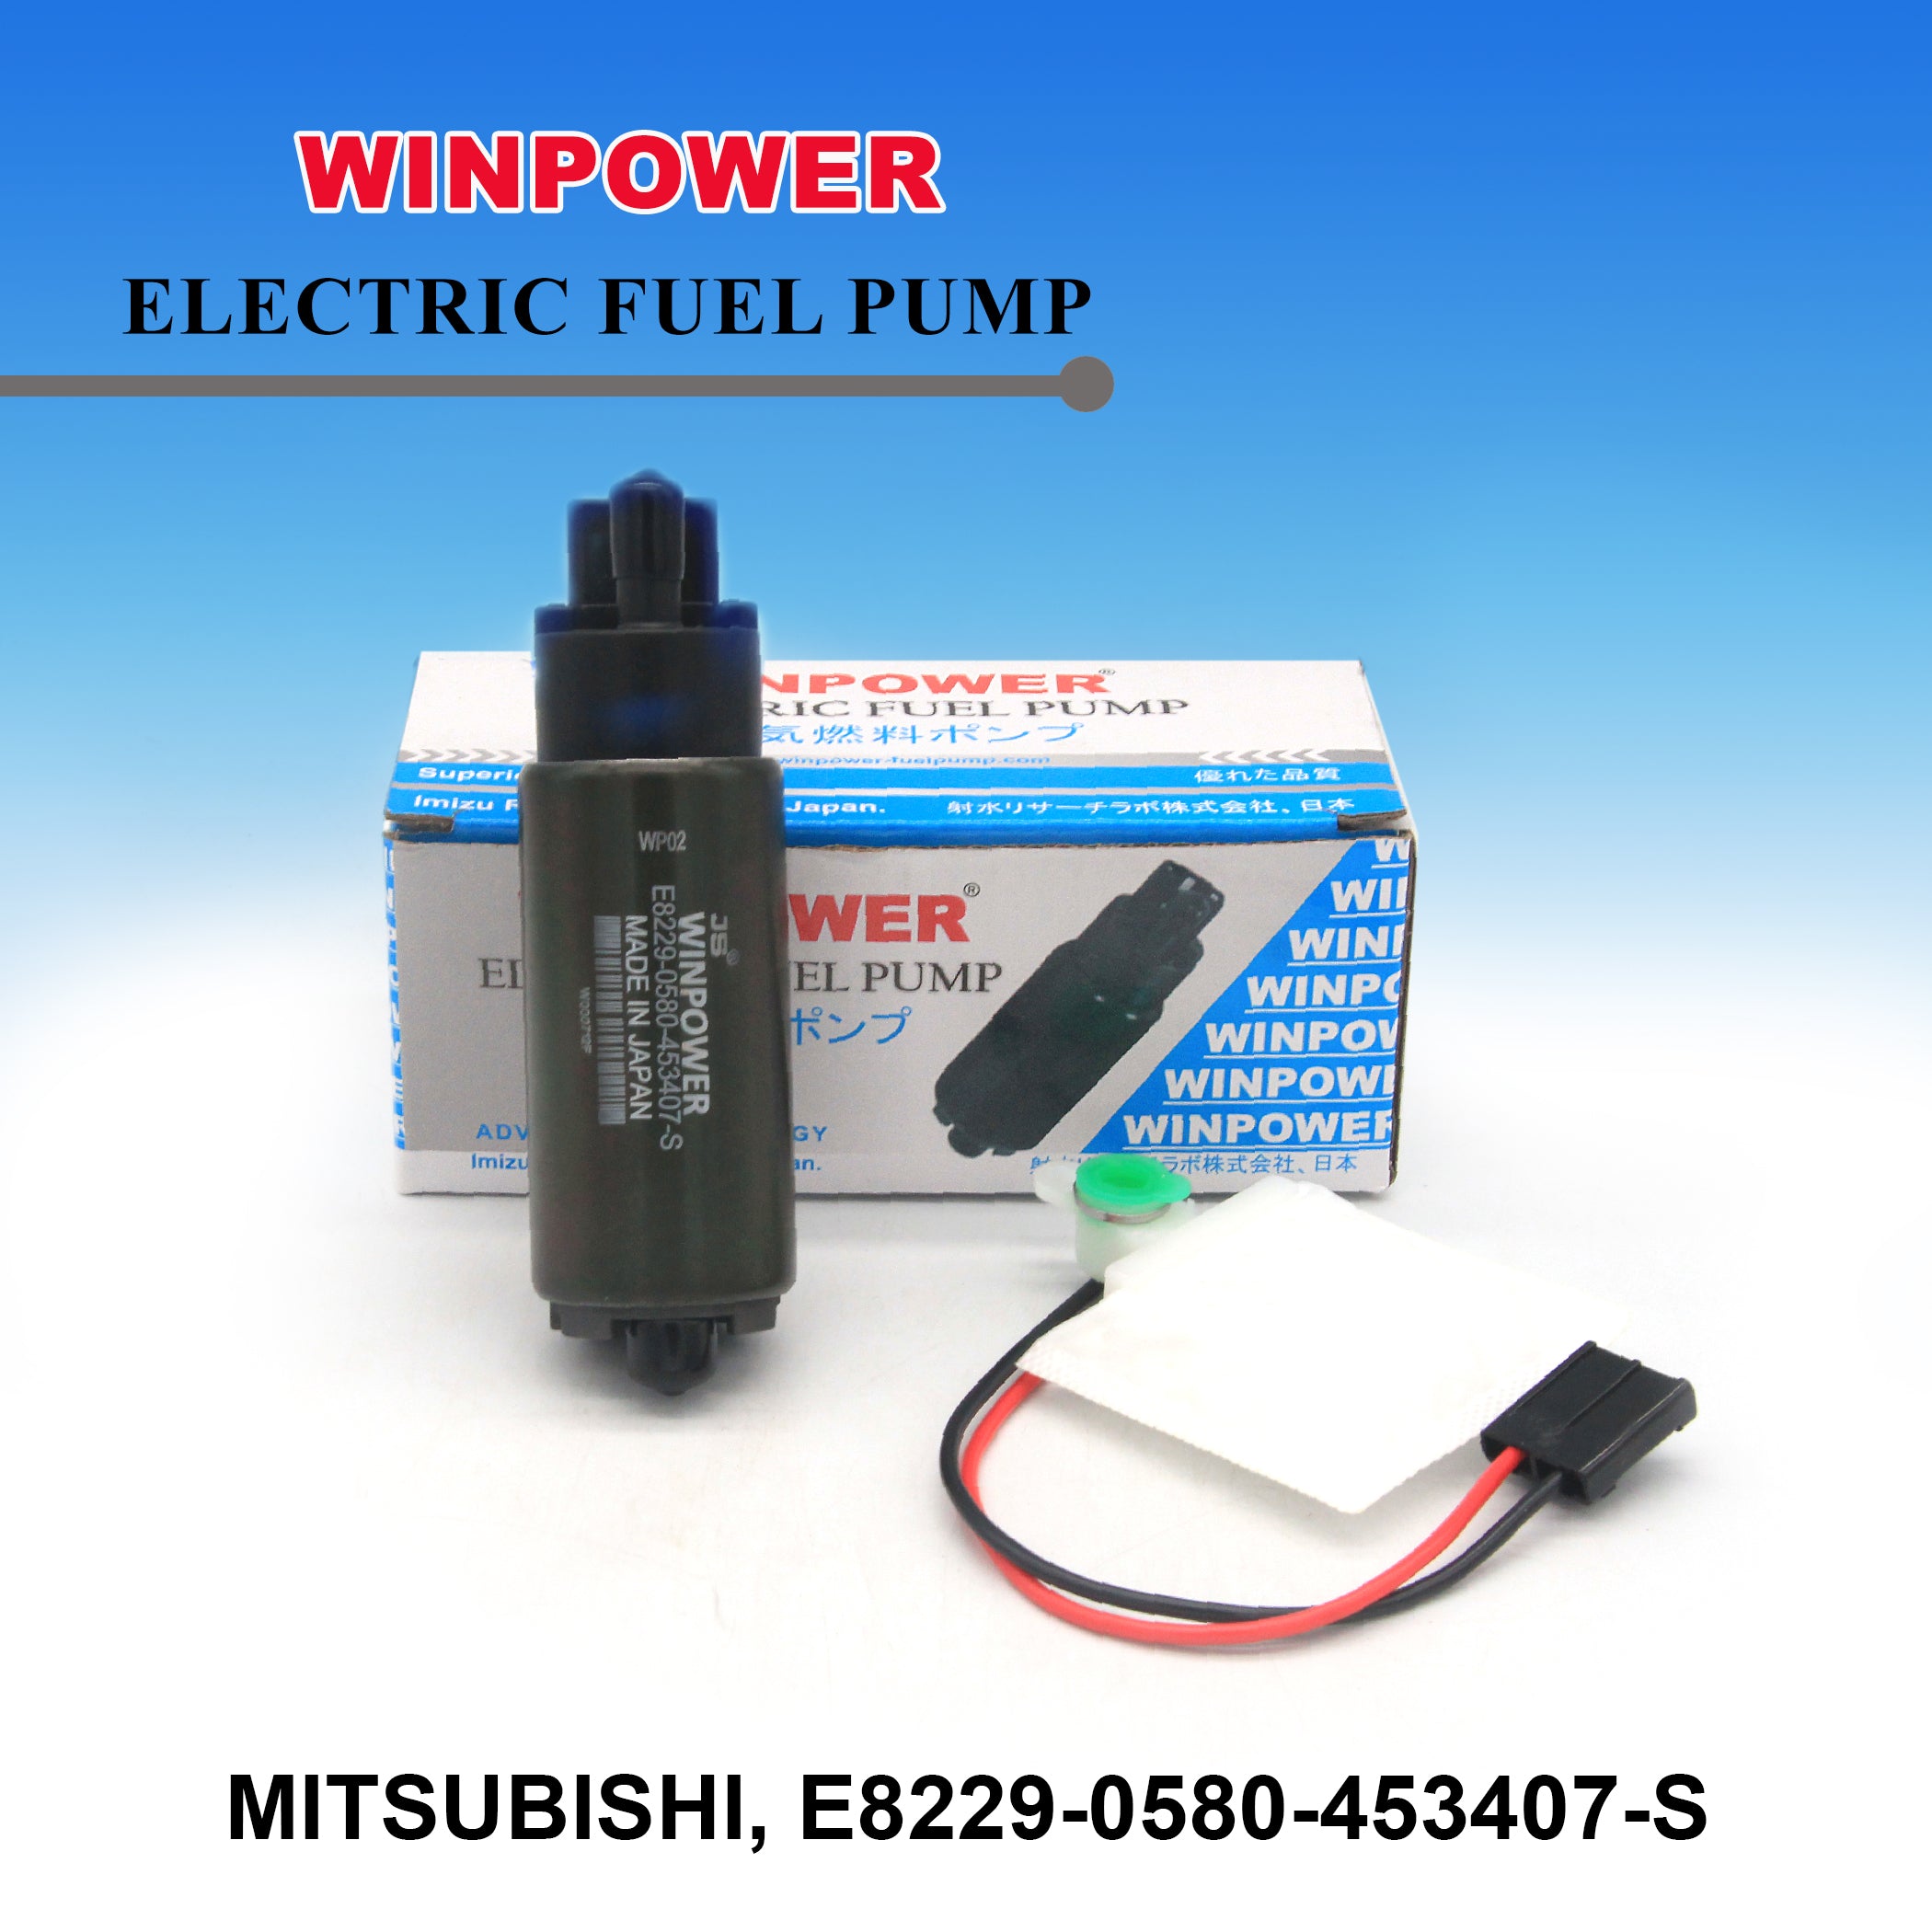 In-Tank Fuel Pump, WINPOWER, Small Pin, E8229-0580-453407-S, WF-3802-1 (004219)